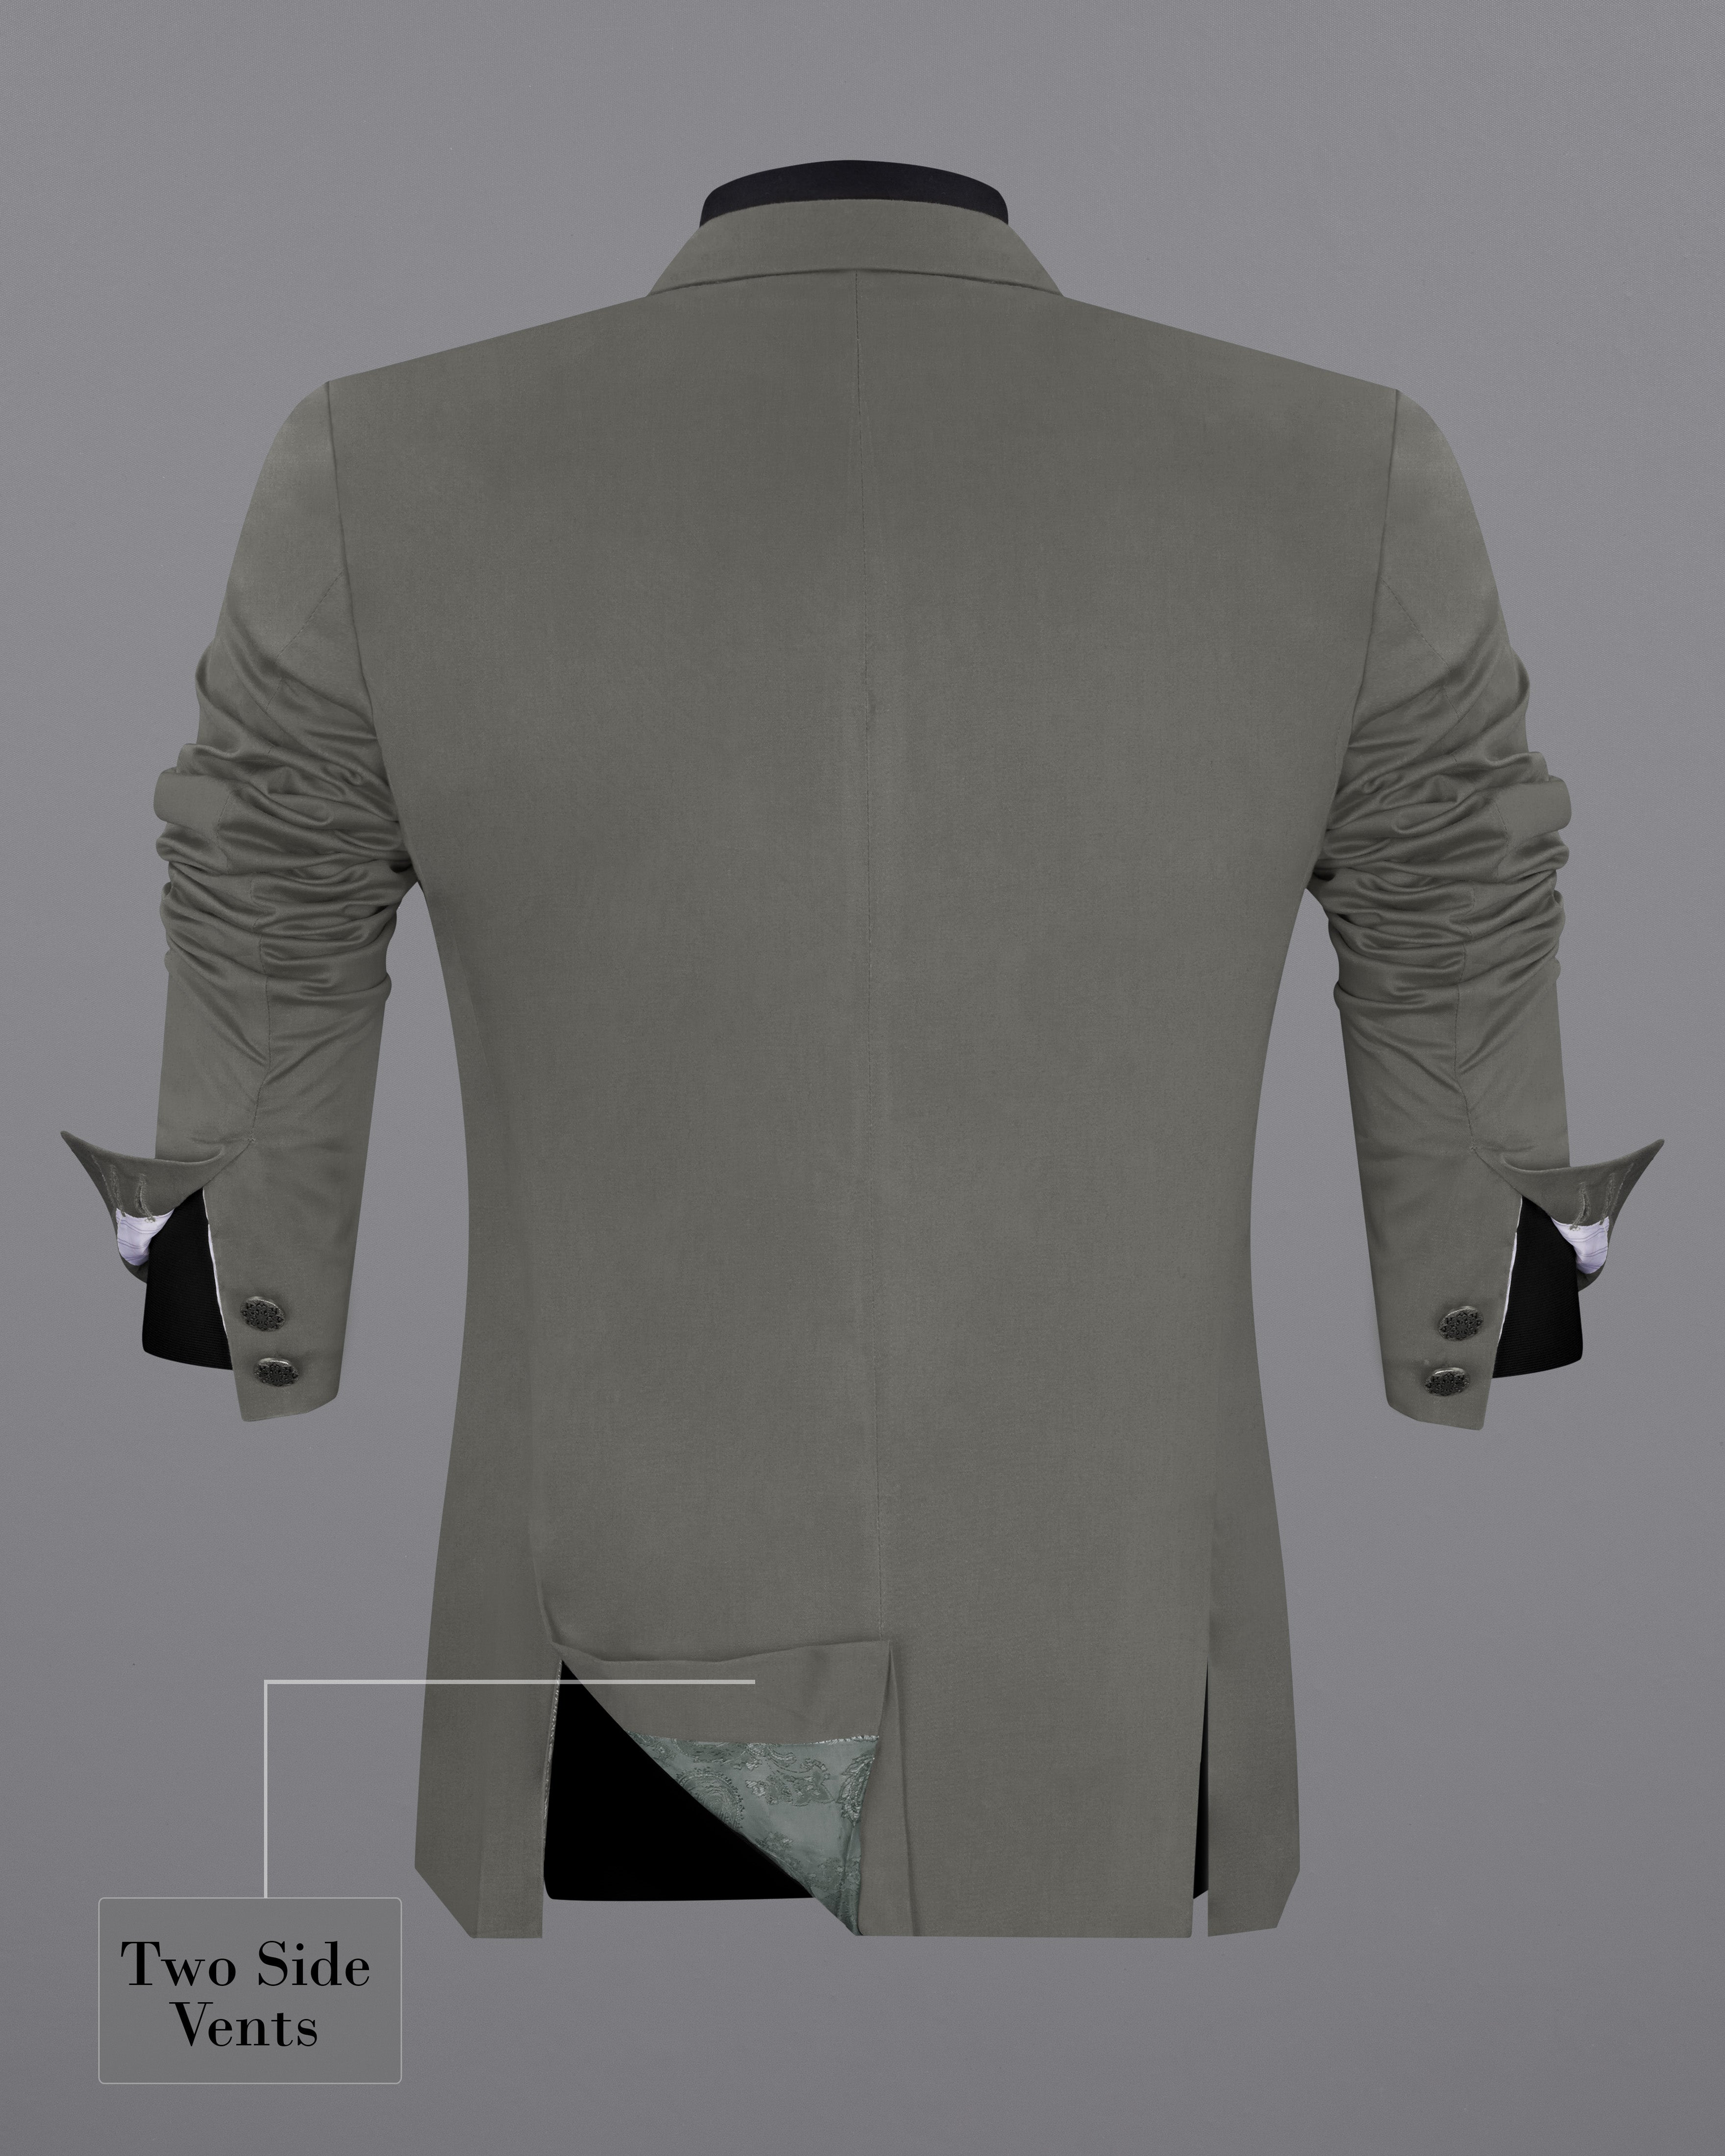 Ironside Gray Stretchable Cross Placket Bandhgala Premium Cotton traveler Blazer